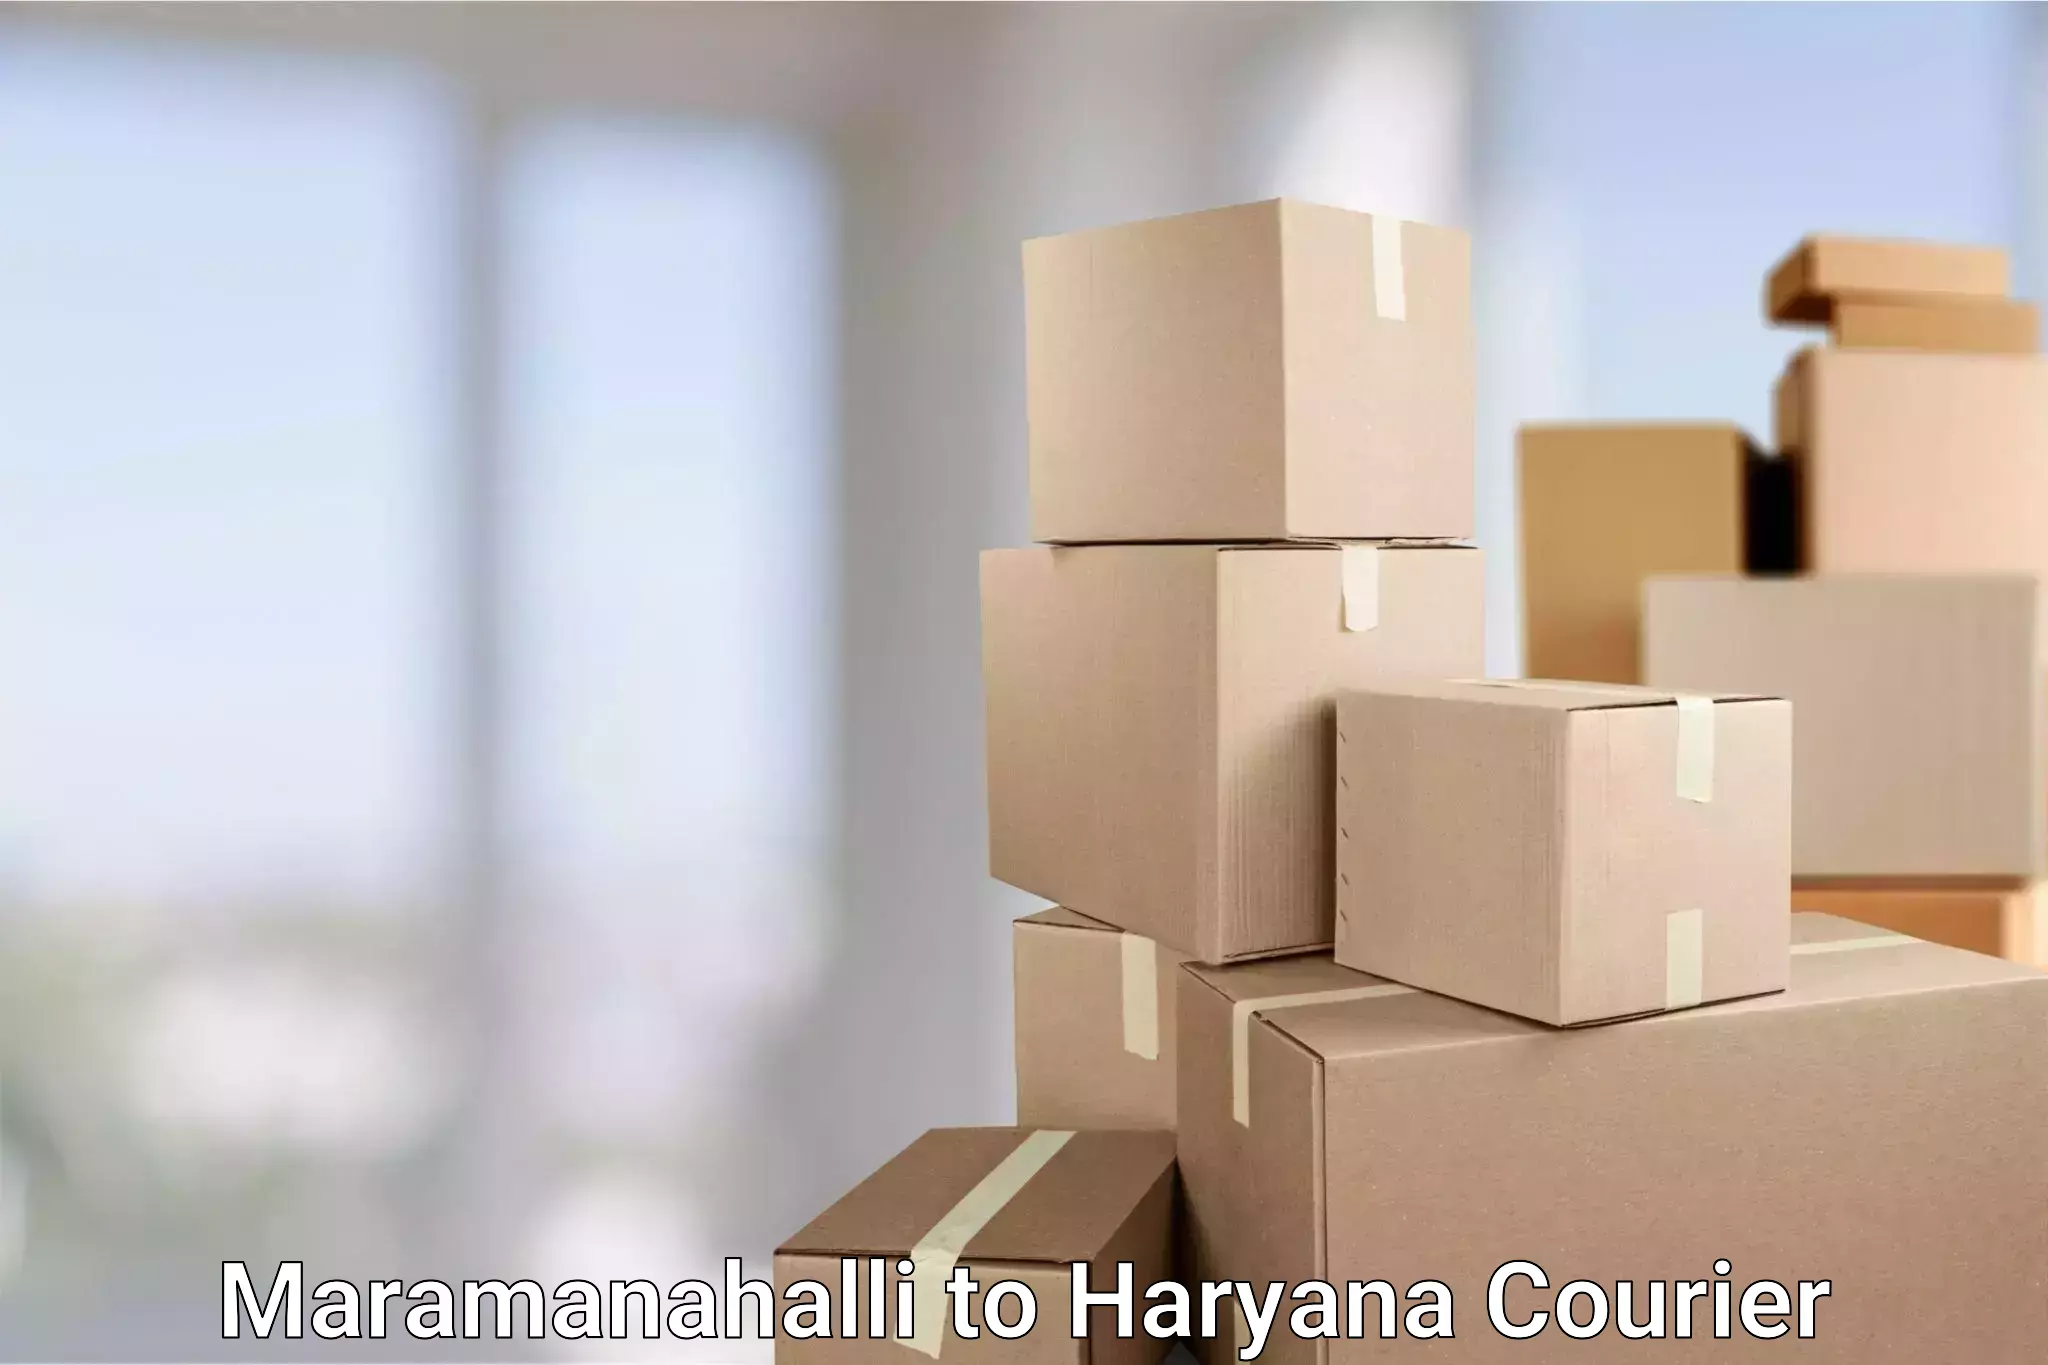 Subscription-based courier Maramanahalli to Haryana